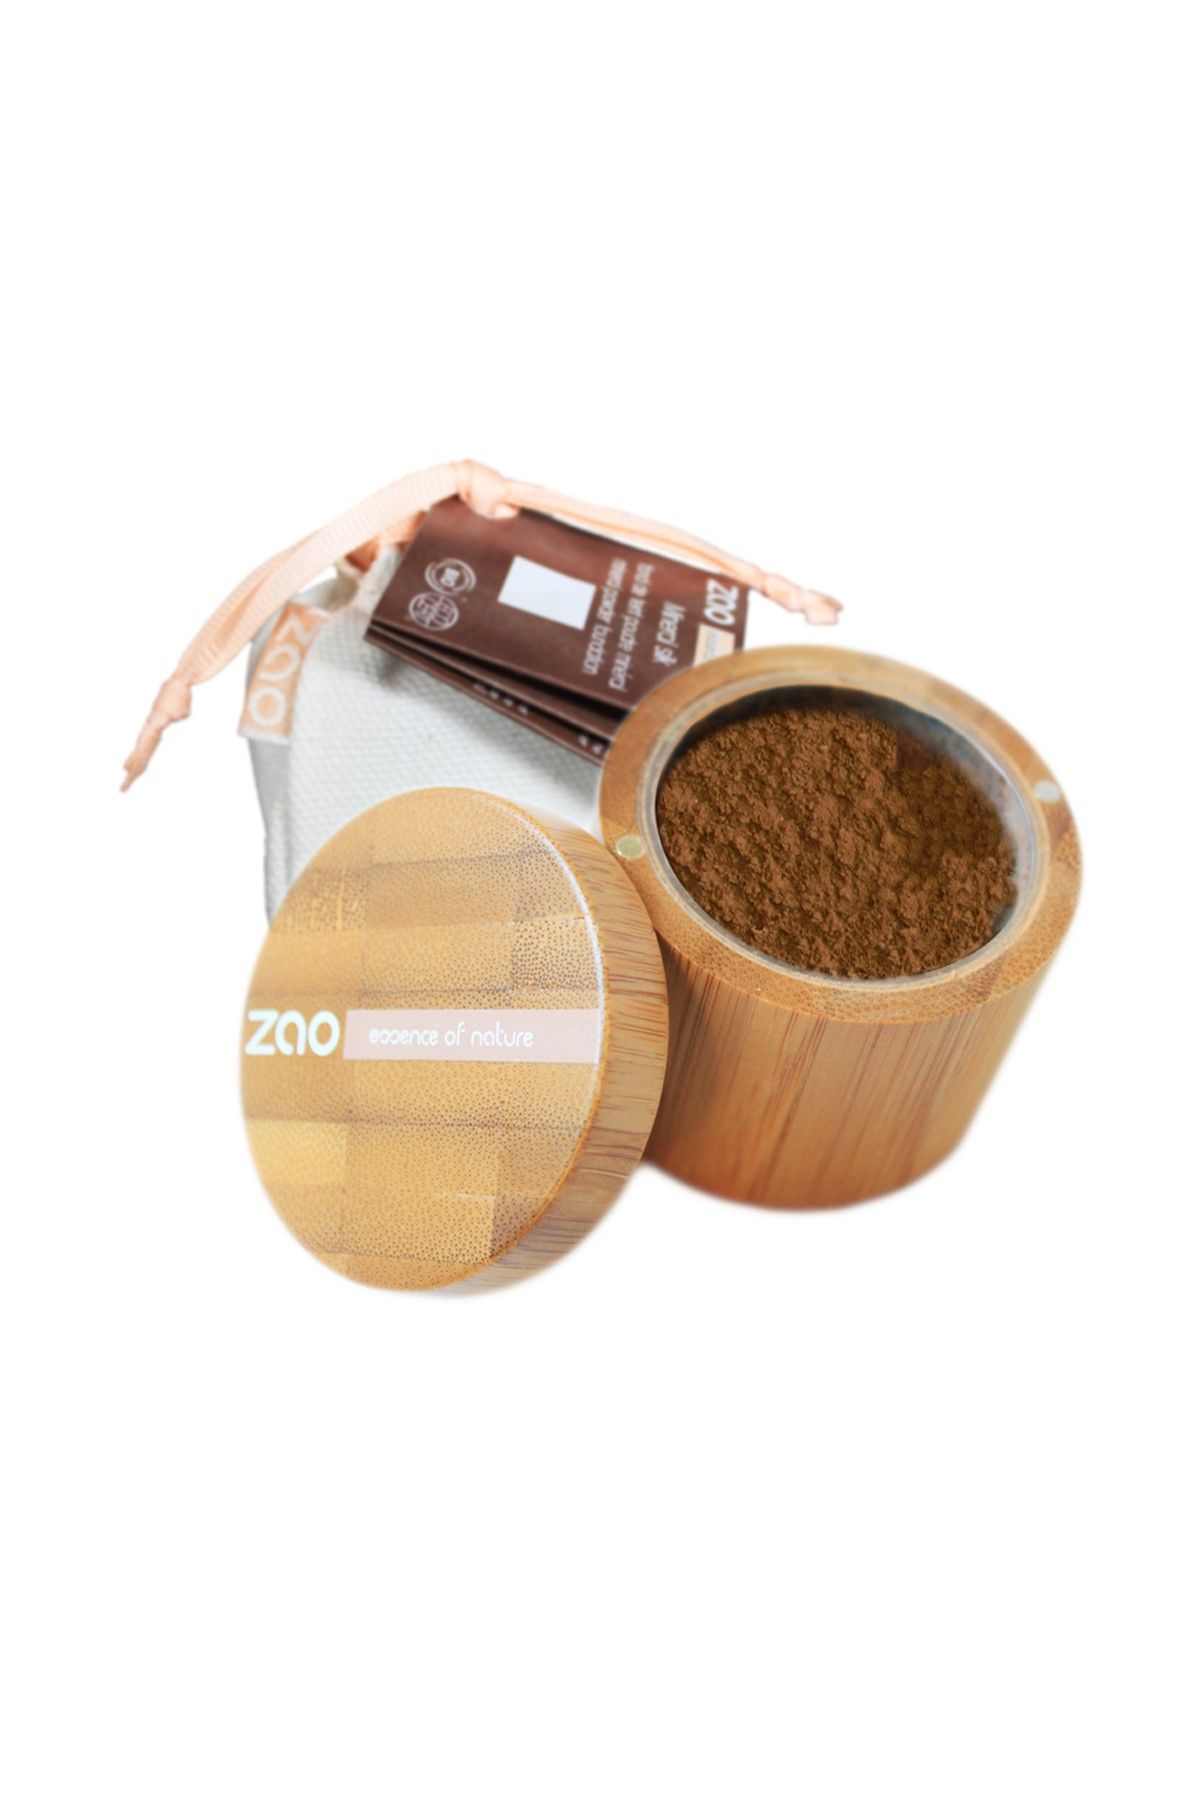 Zao Organik Toz Pudra - Bamboo Mineral Silk 506 Brown Beige 15 g 3700756605067